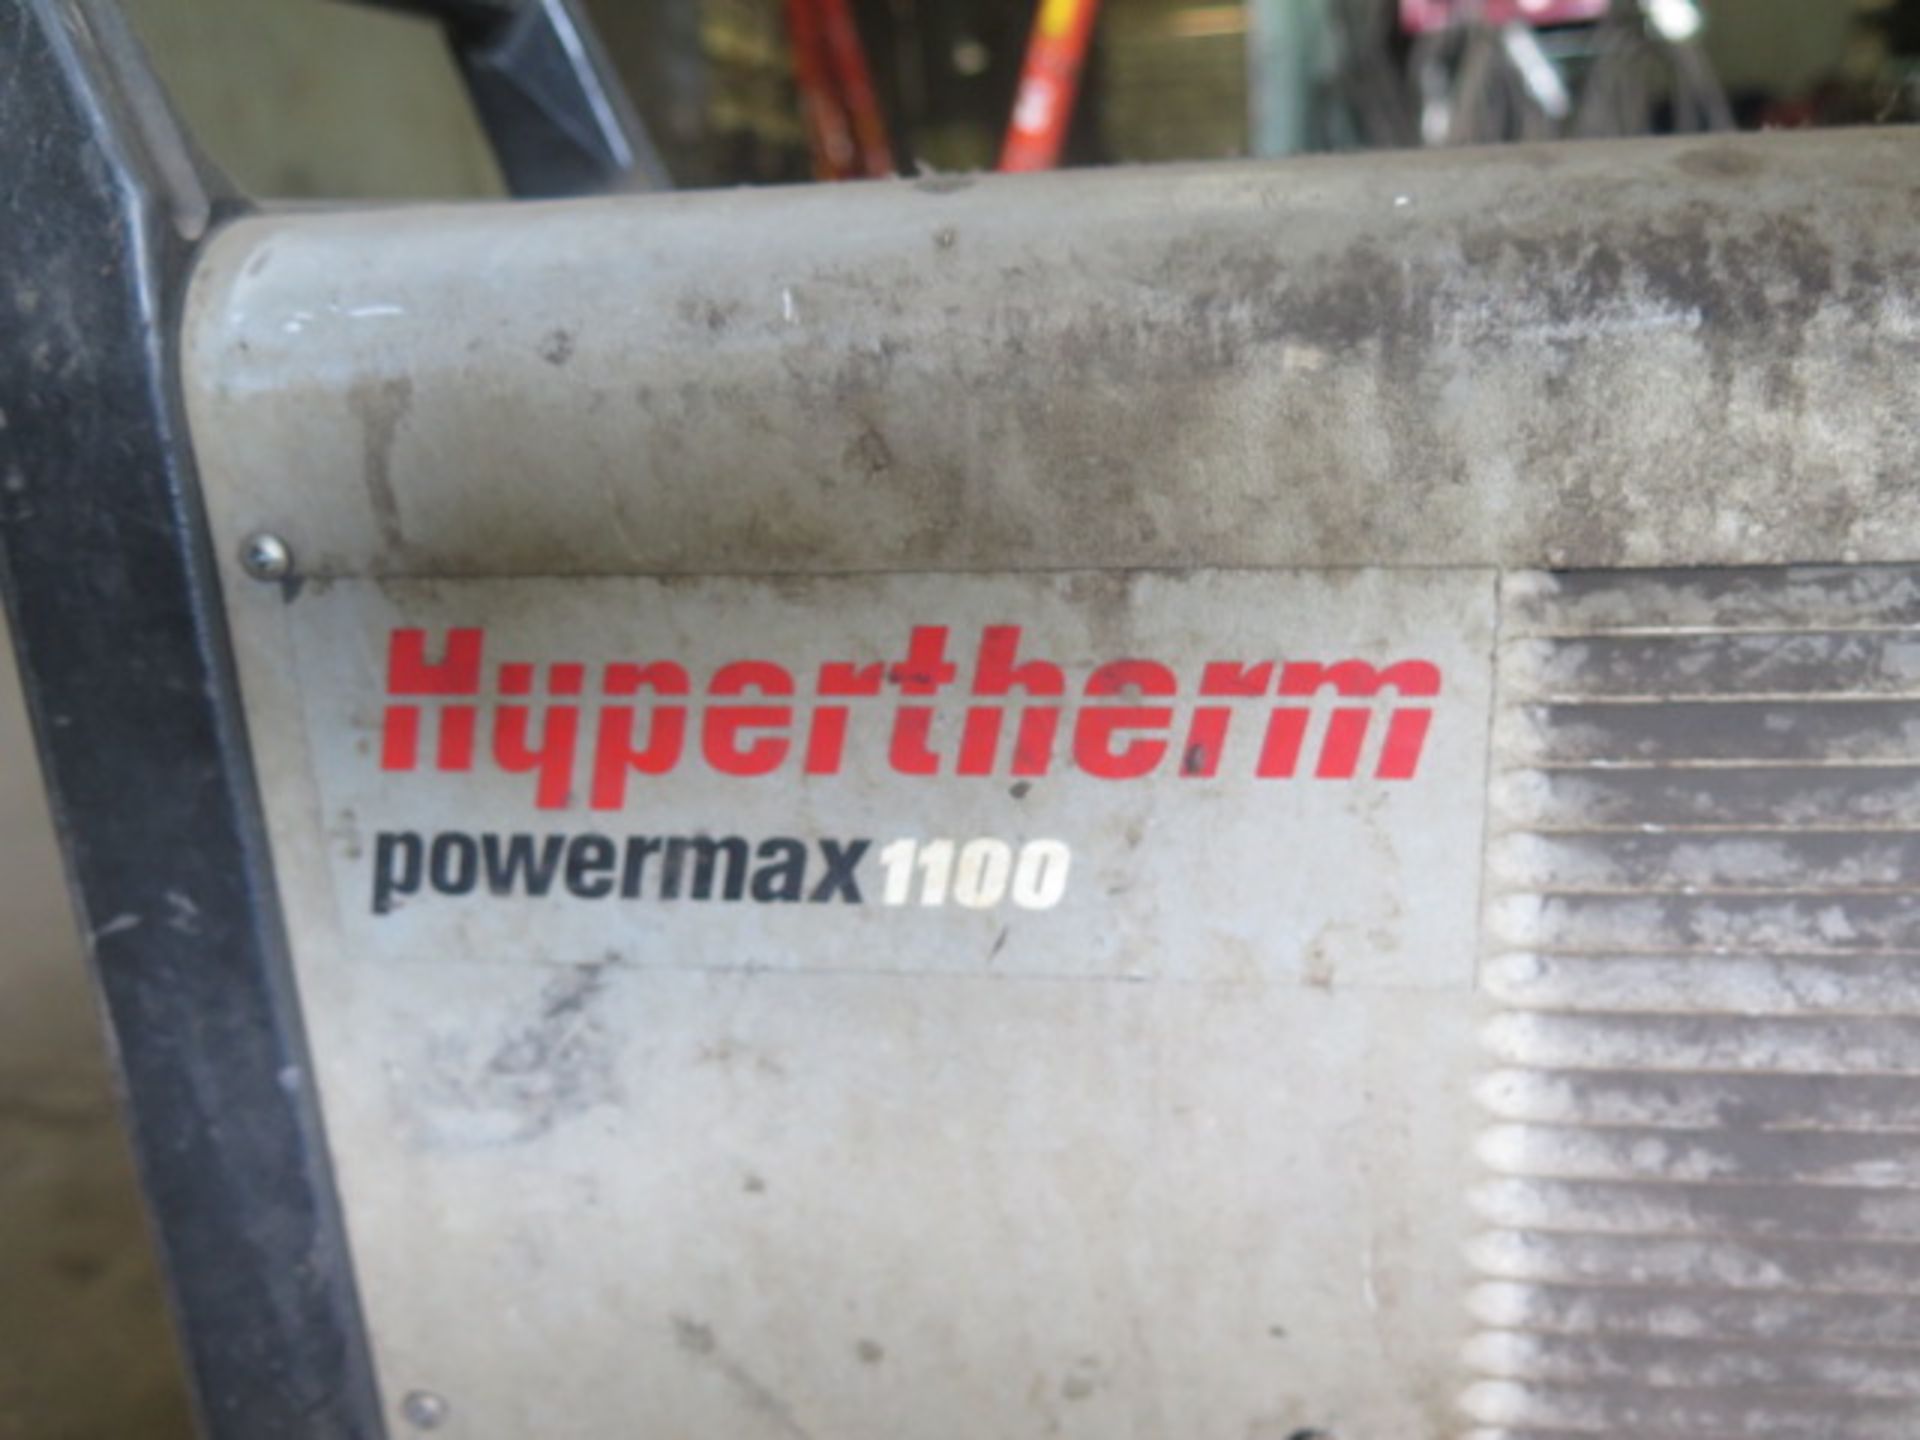 Hypertherm PowerMAX 1100 Plasma Cutting Power Source - Image 5 of 5